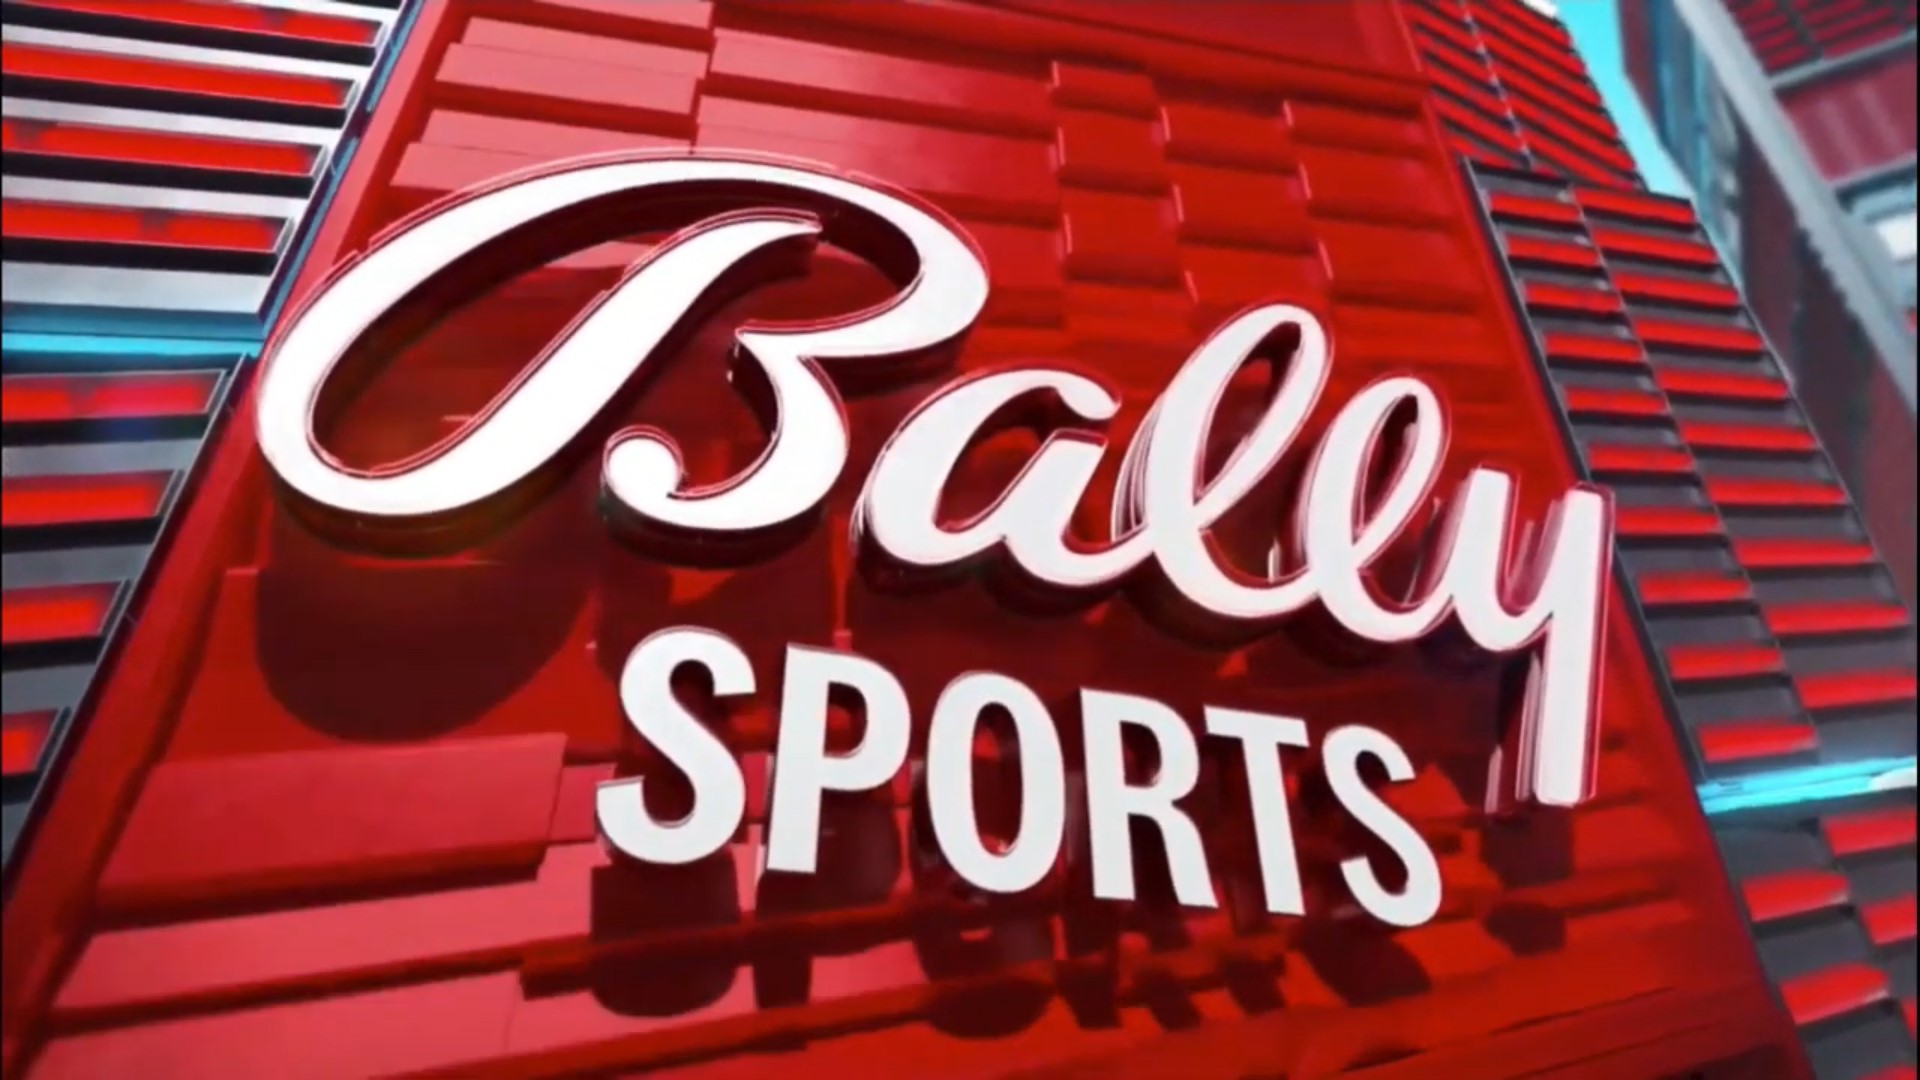 Bally's Sports